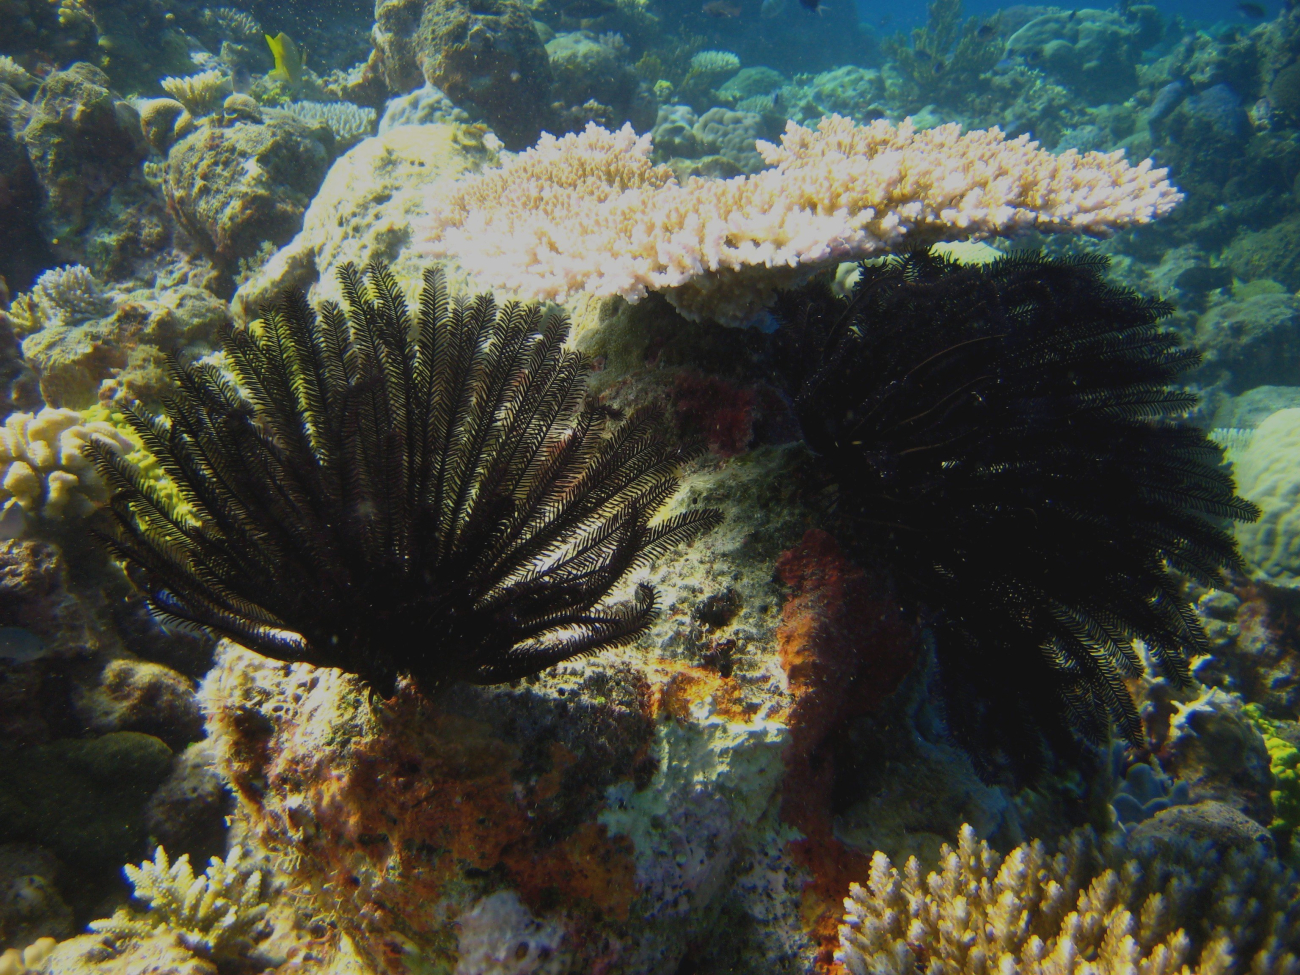 Black crinoids and a tabular coral